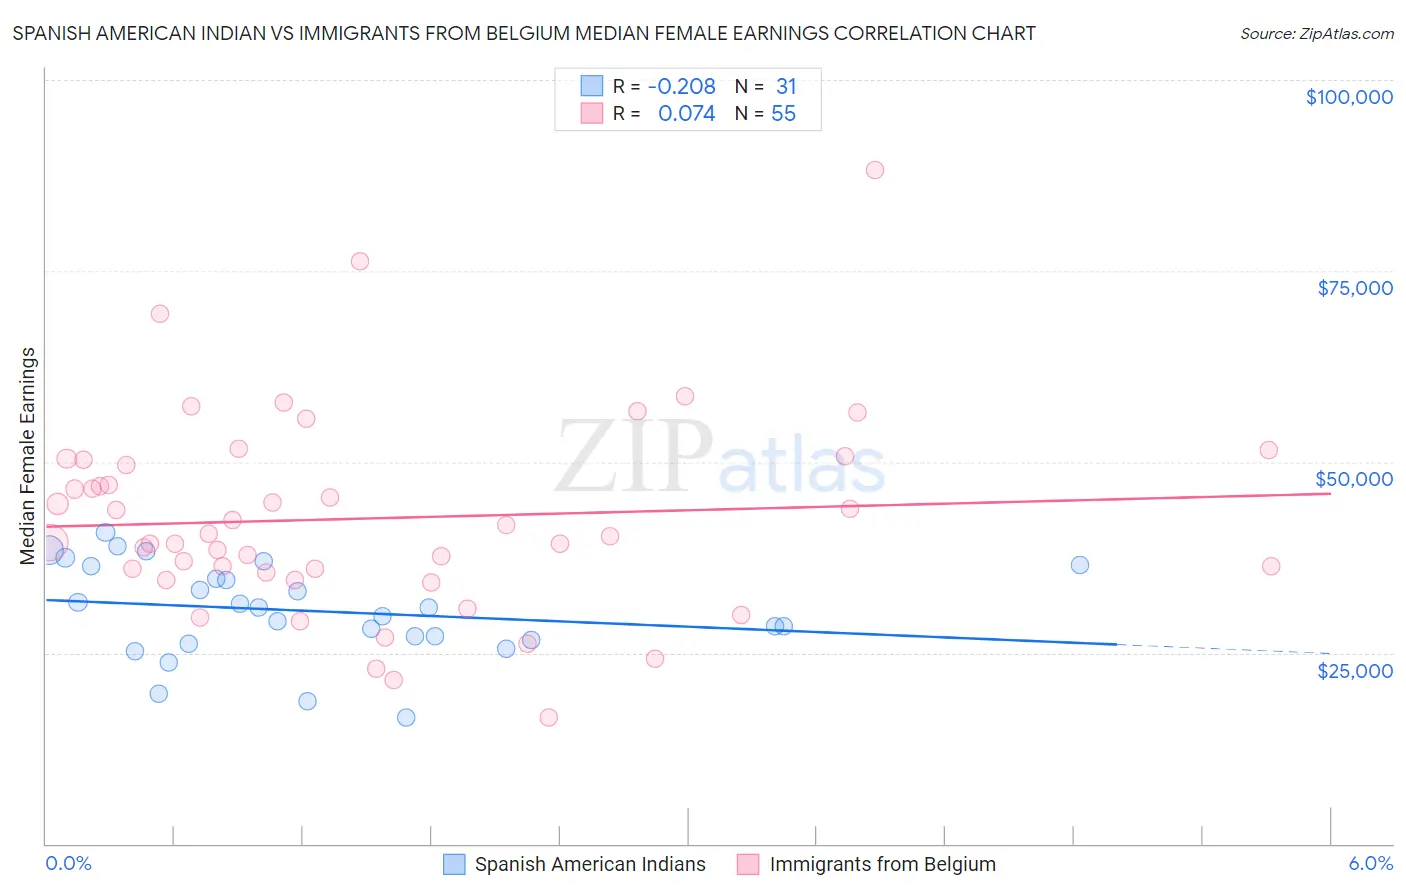 Spanish American Indian vs Immigrants from Belgium Median Female Earnings